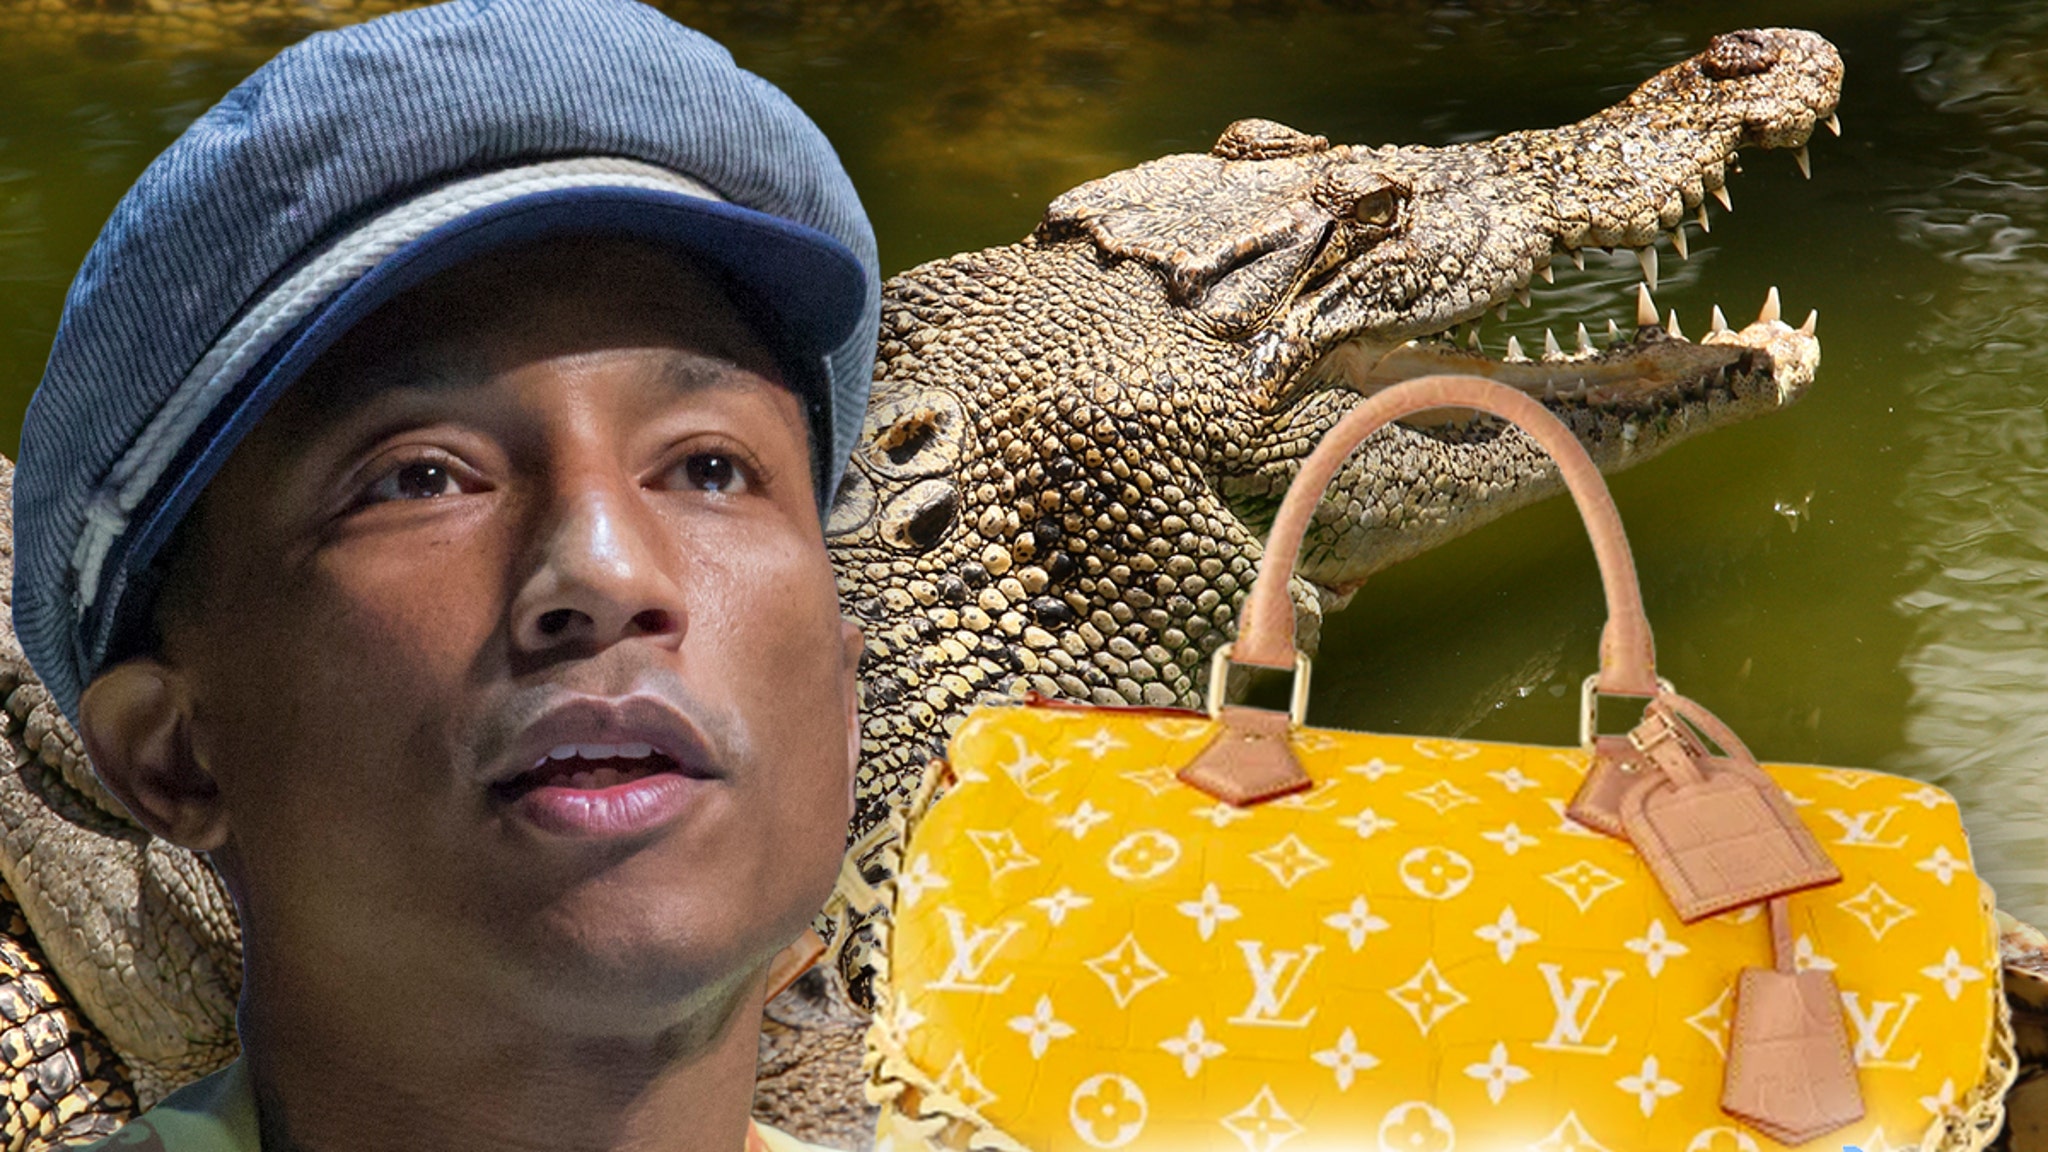 Pharrell Debuts $1 Million Croc Handbag, PETA Calls LVMH Savage